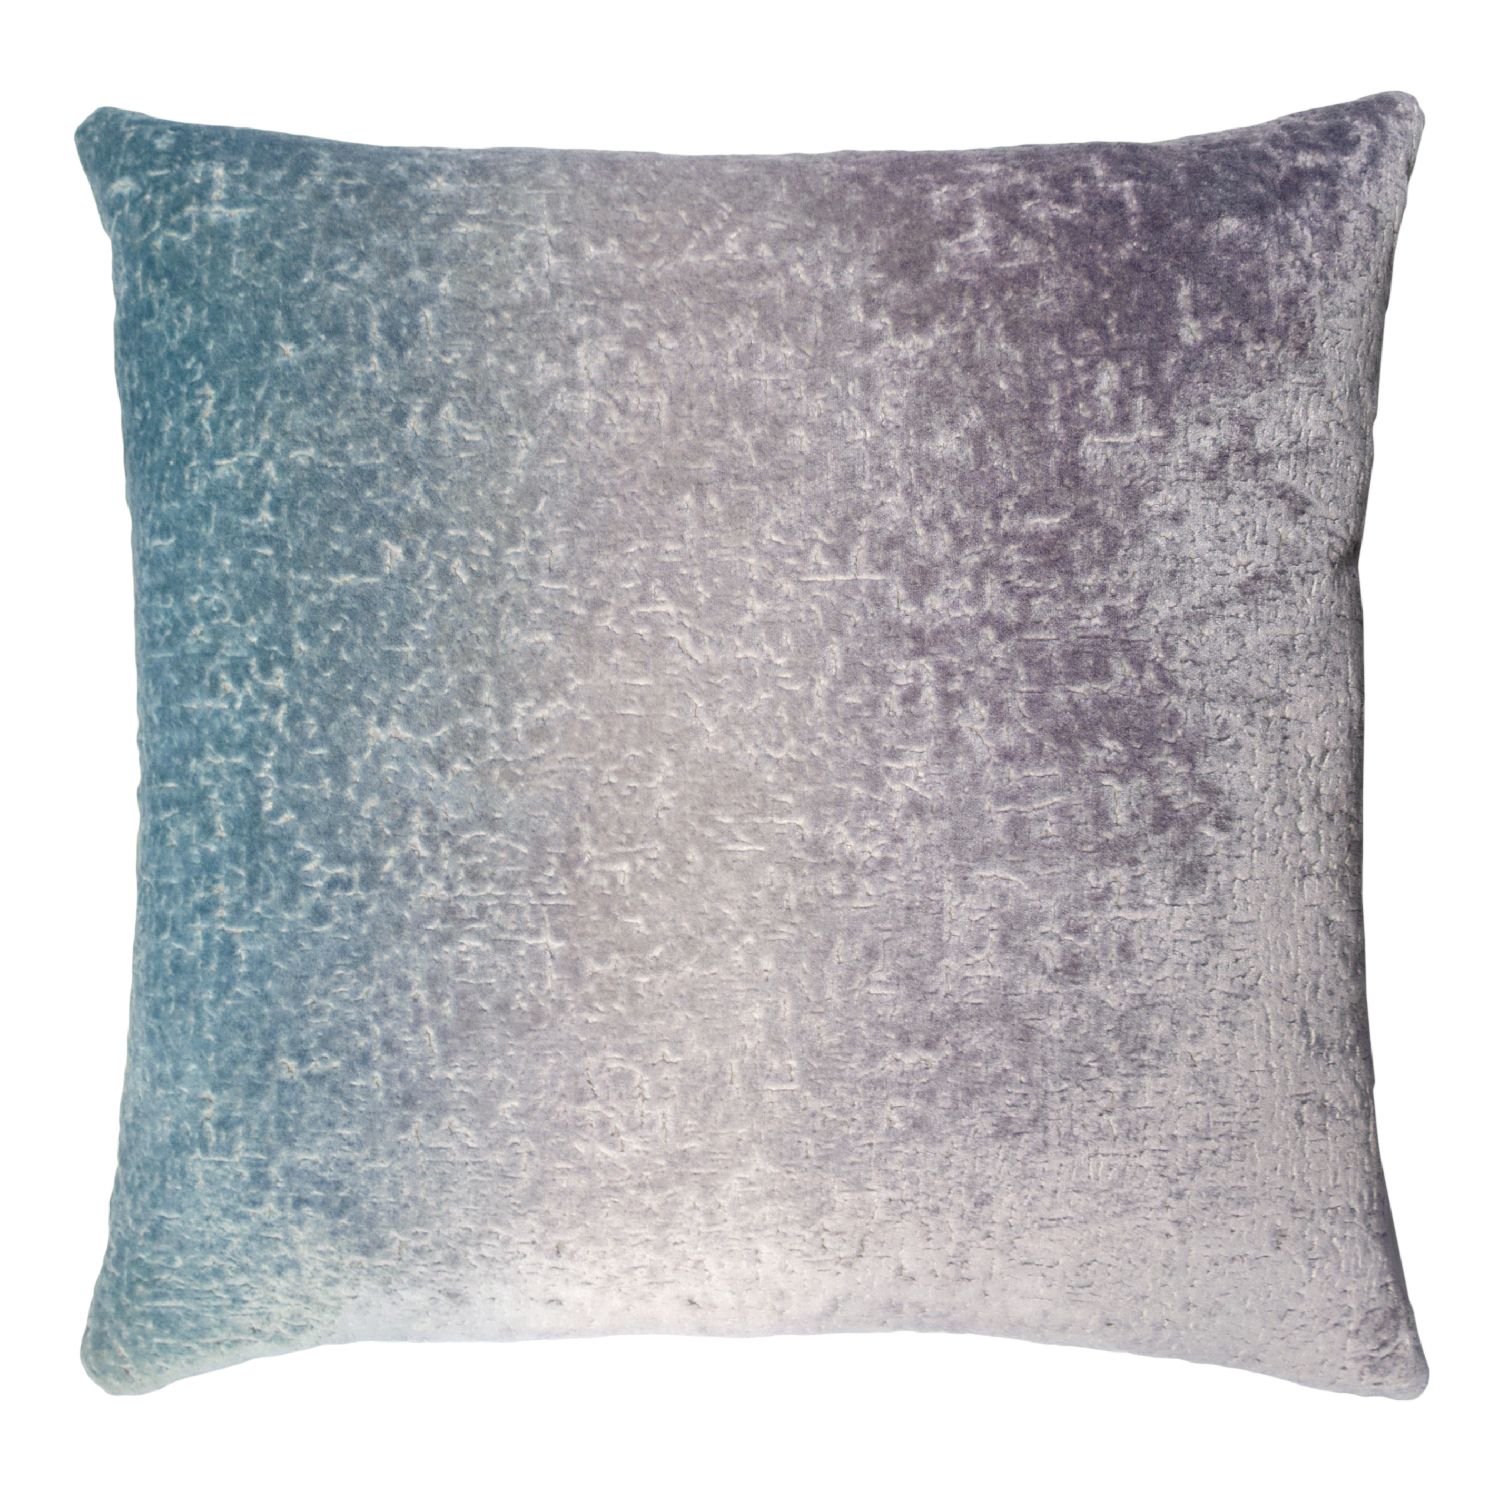 Coral Reef Textured Velvet Pillow